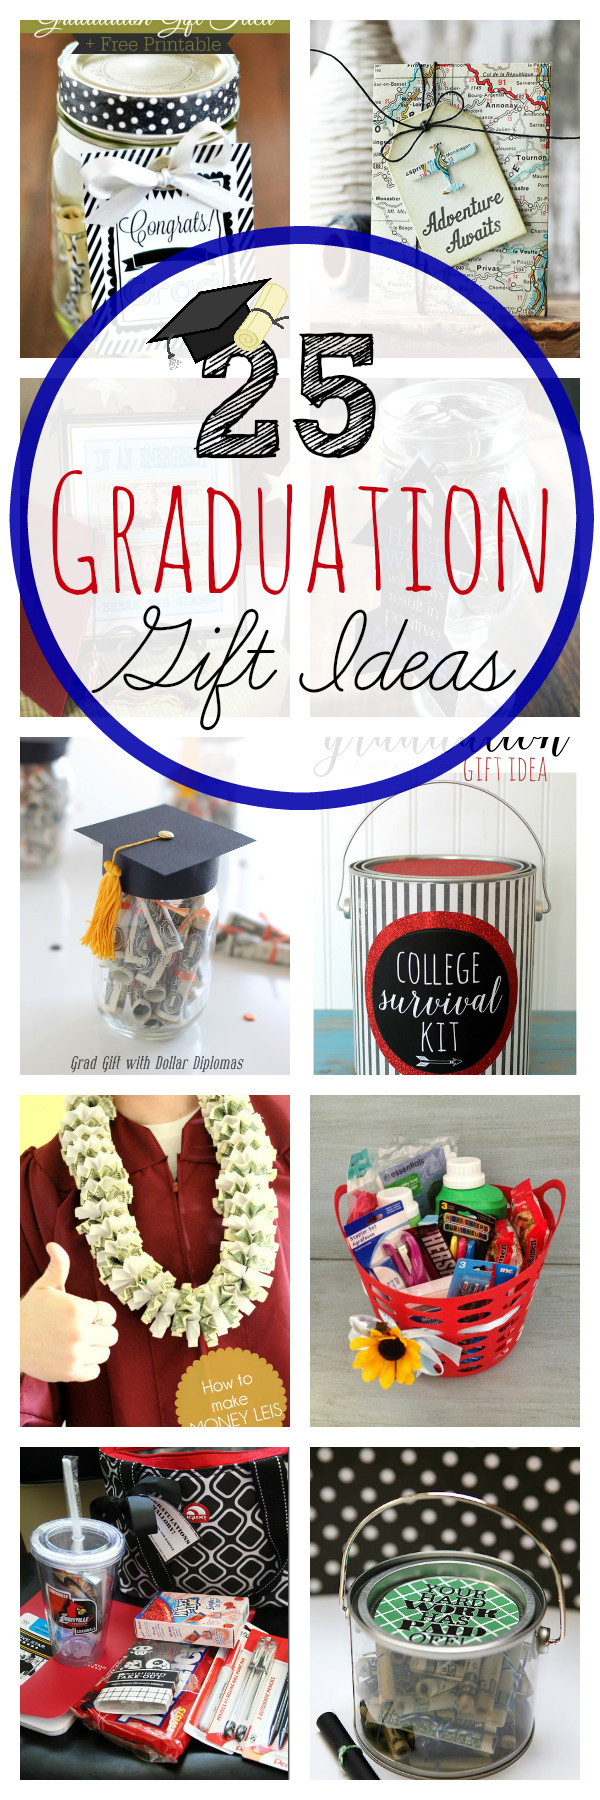 8Th Grade Boy Graduation Gift Ideas
 25 Graduation Gift Ideas